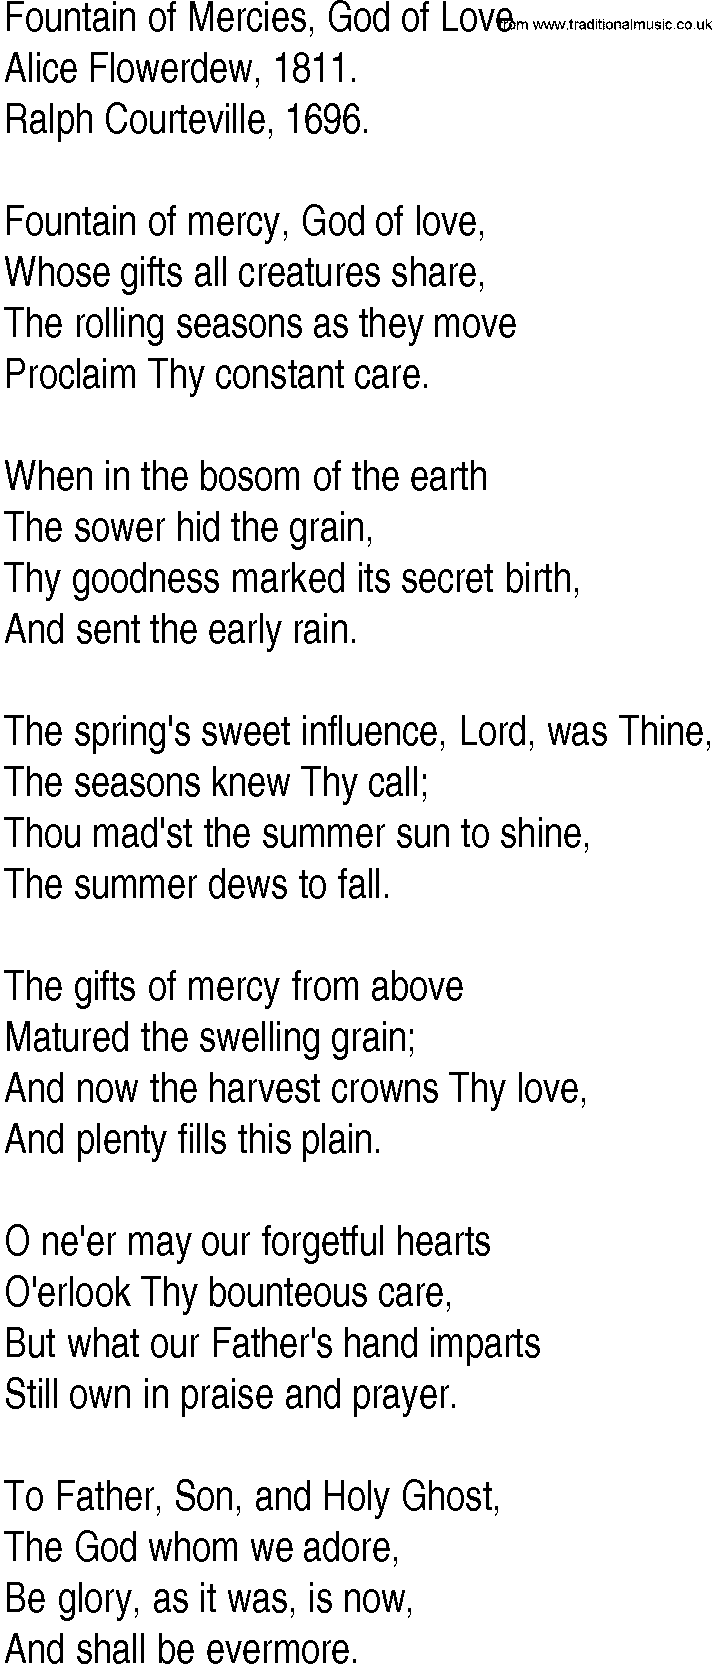 Hymn and Gospel Song: Fountain of Mercies, God of Love by Alice Flowerdew lyrics